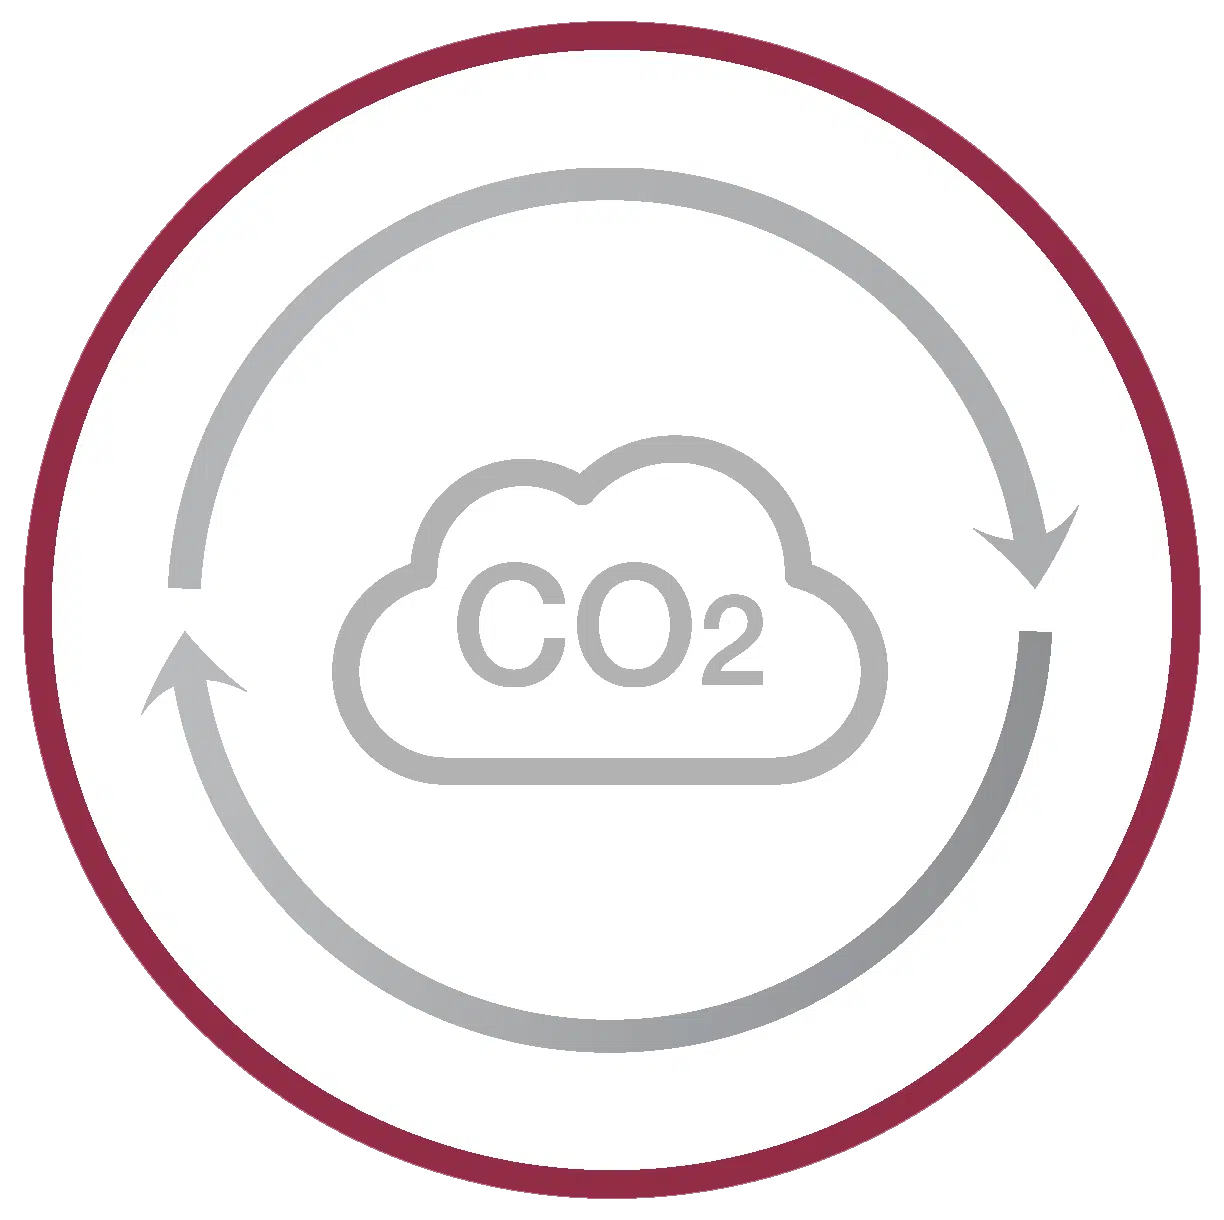 Carbon Capture, Utilization, and Storage